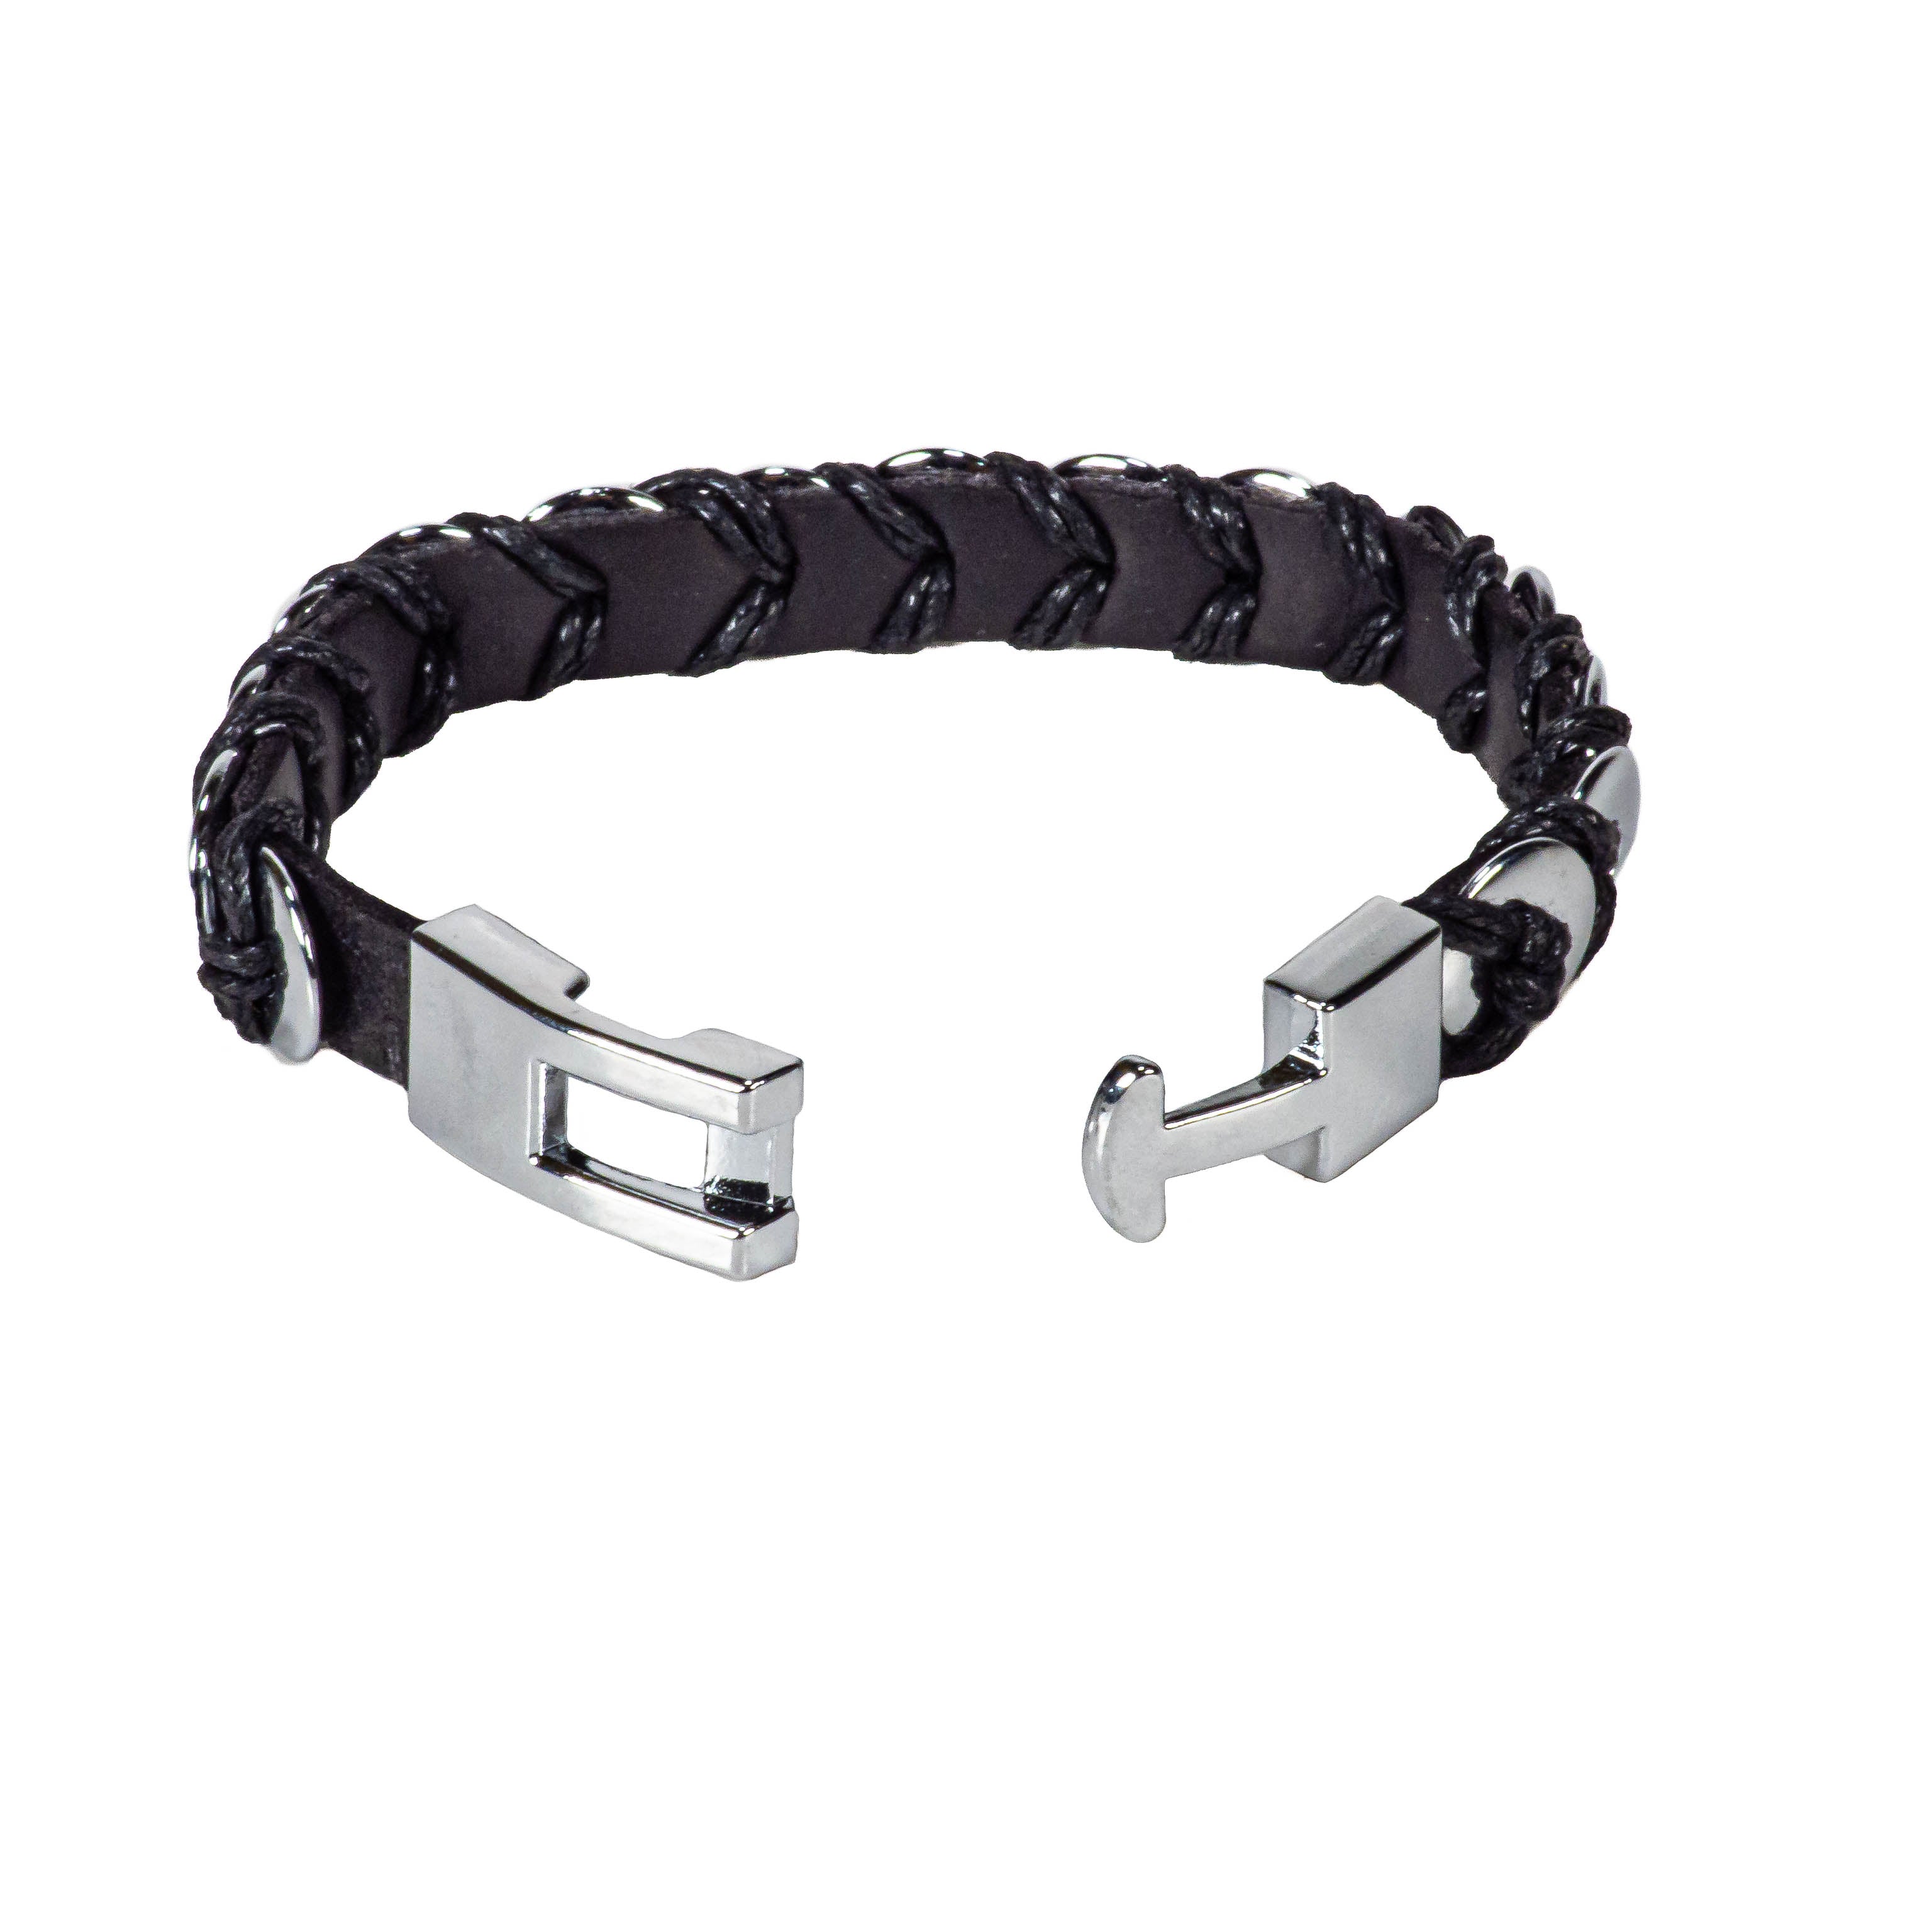 Black Leather Bracelet with Chrome Discs Design